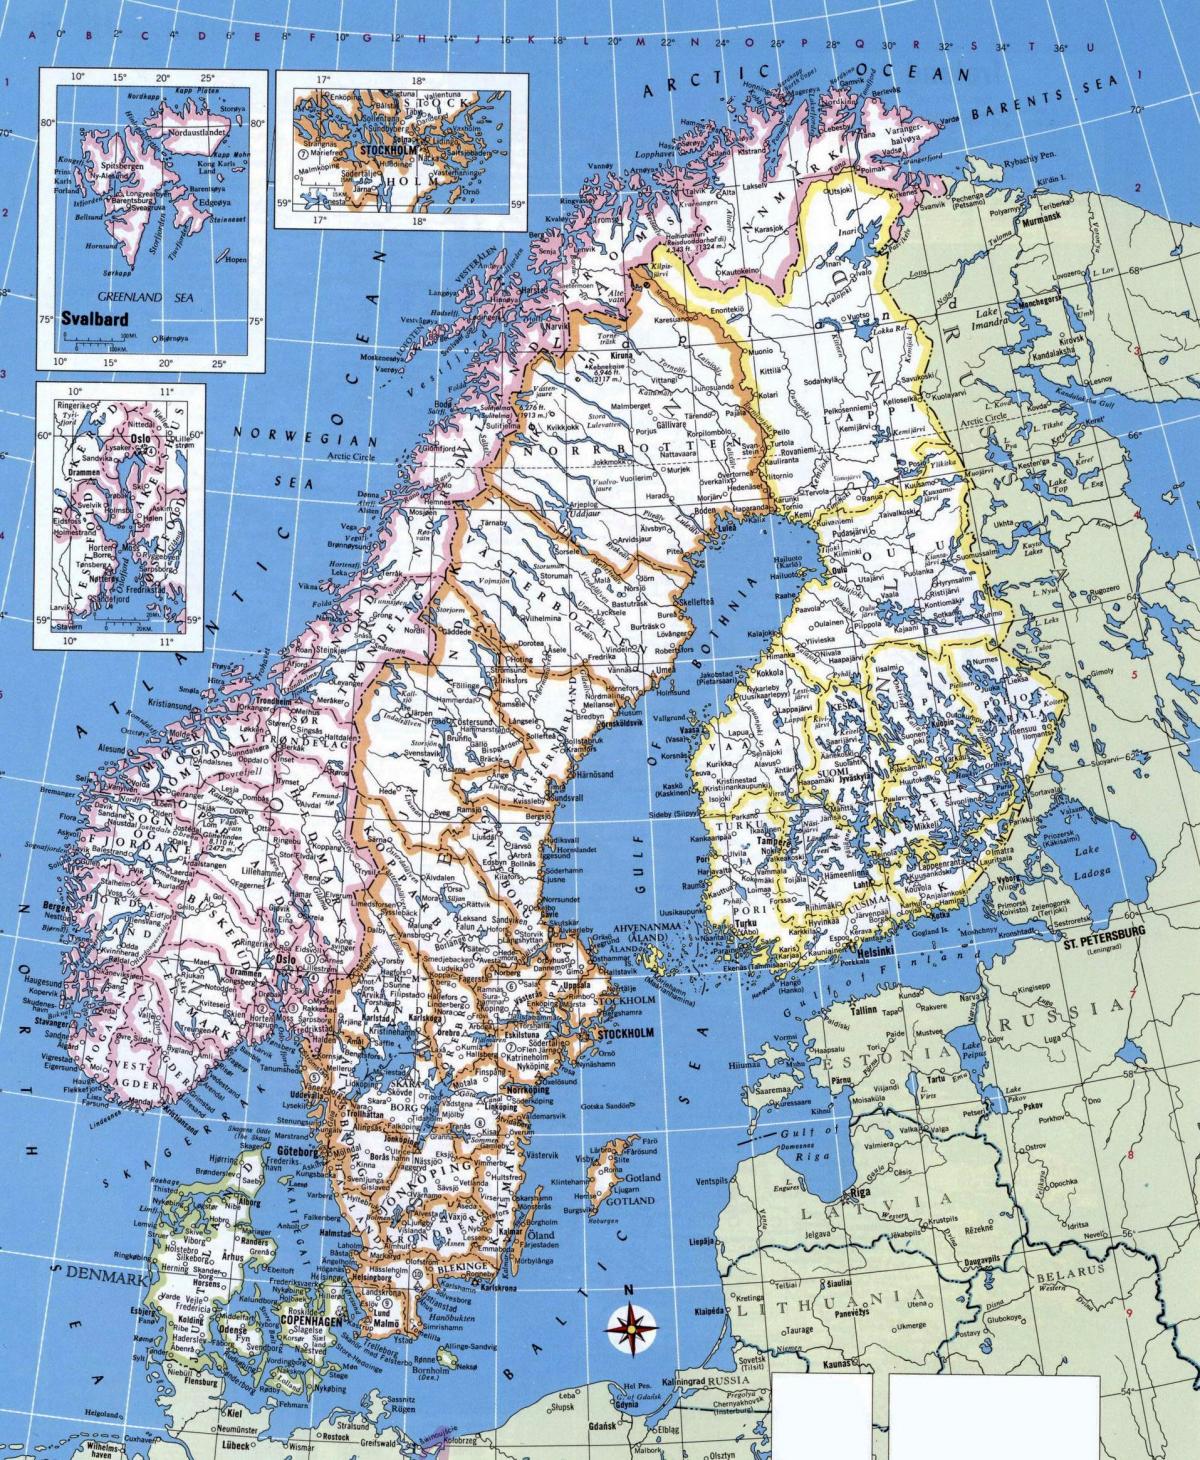 Peta terperinci Norway